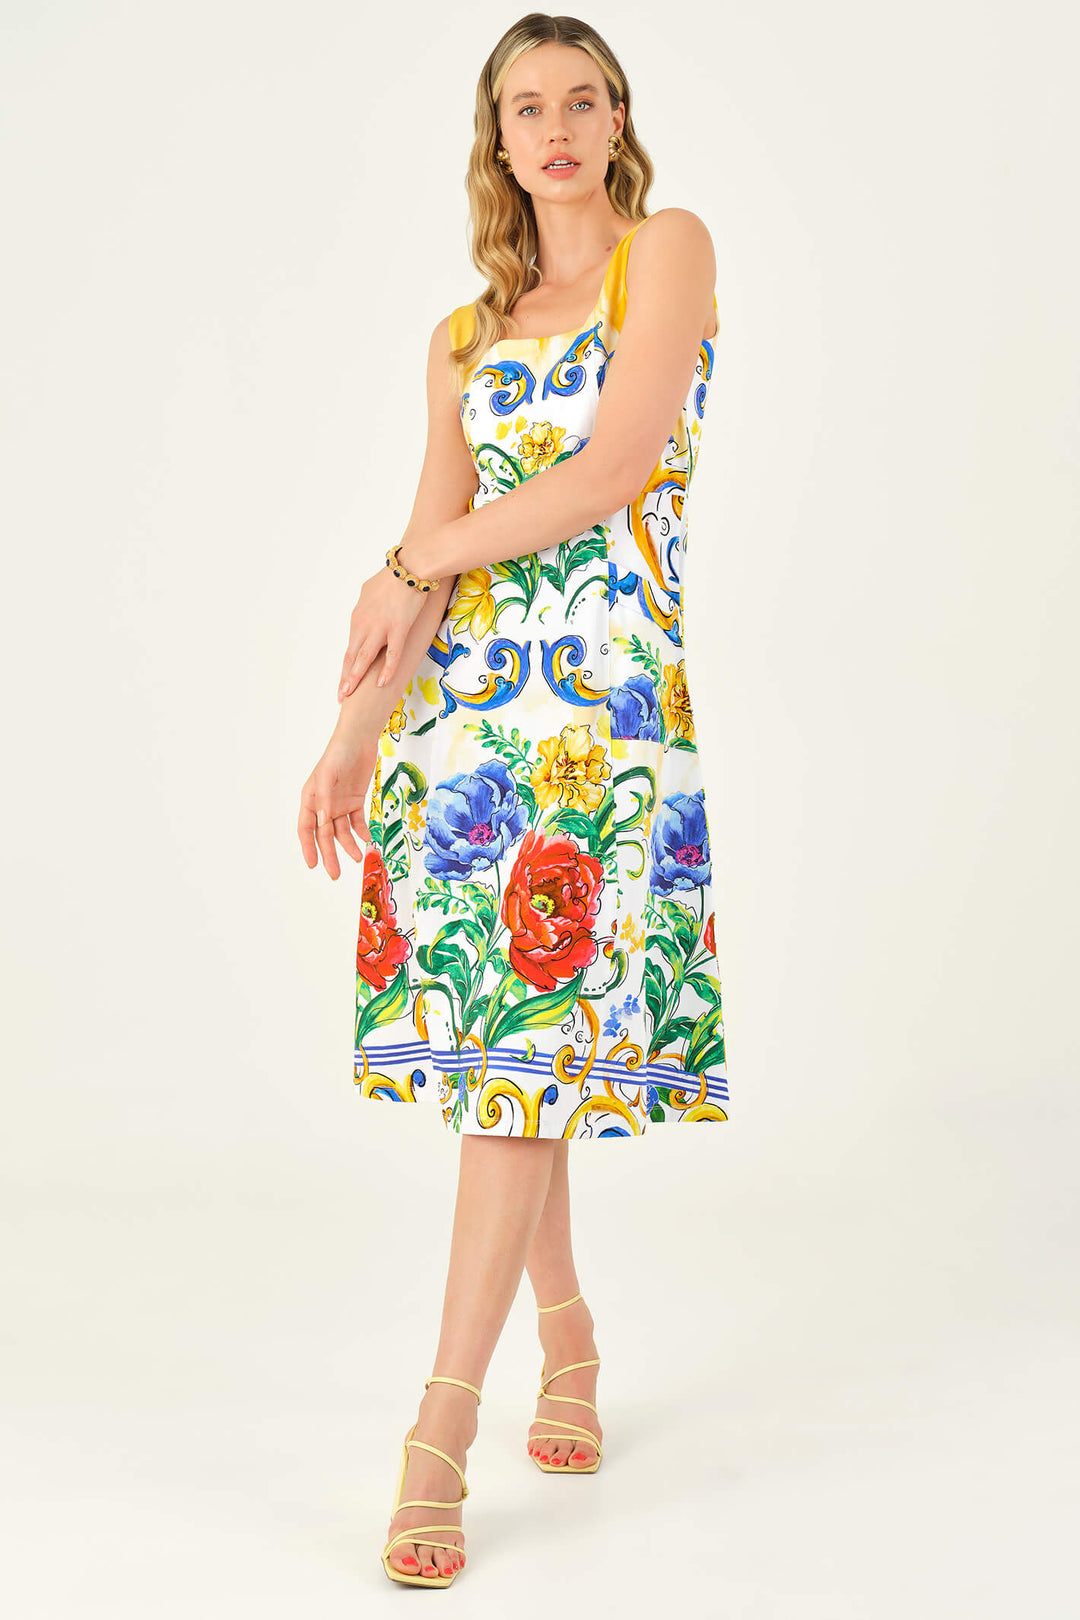 Dolcezza 23140 Yellow Filigree Print Sun Dress - Experience Boutique